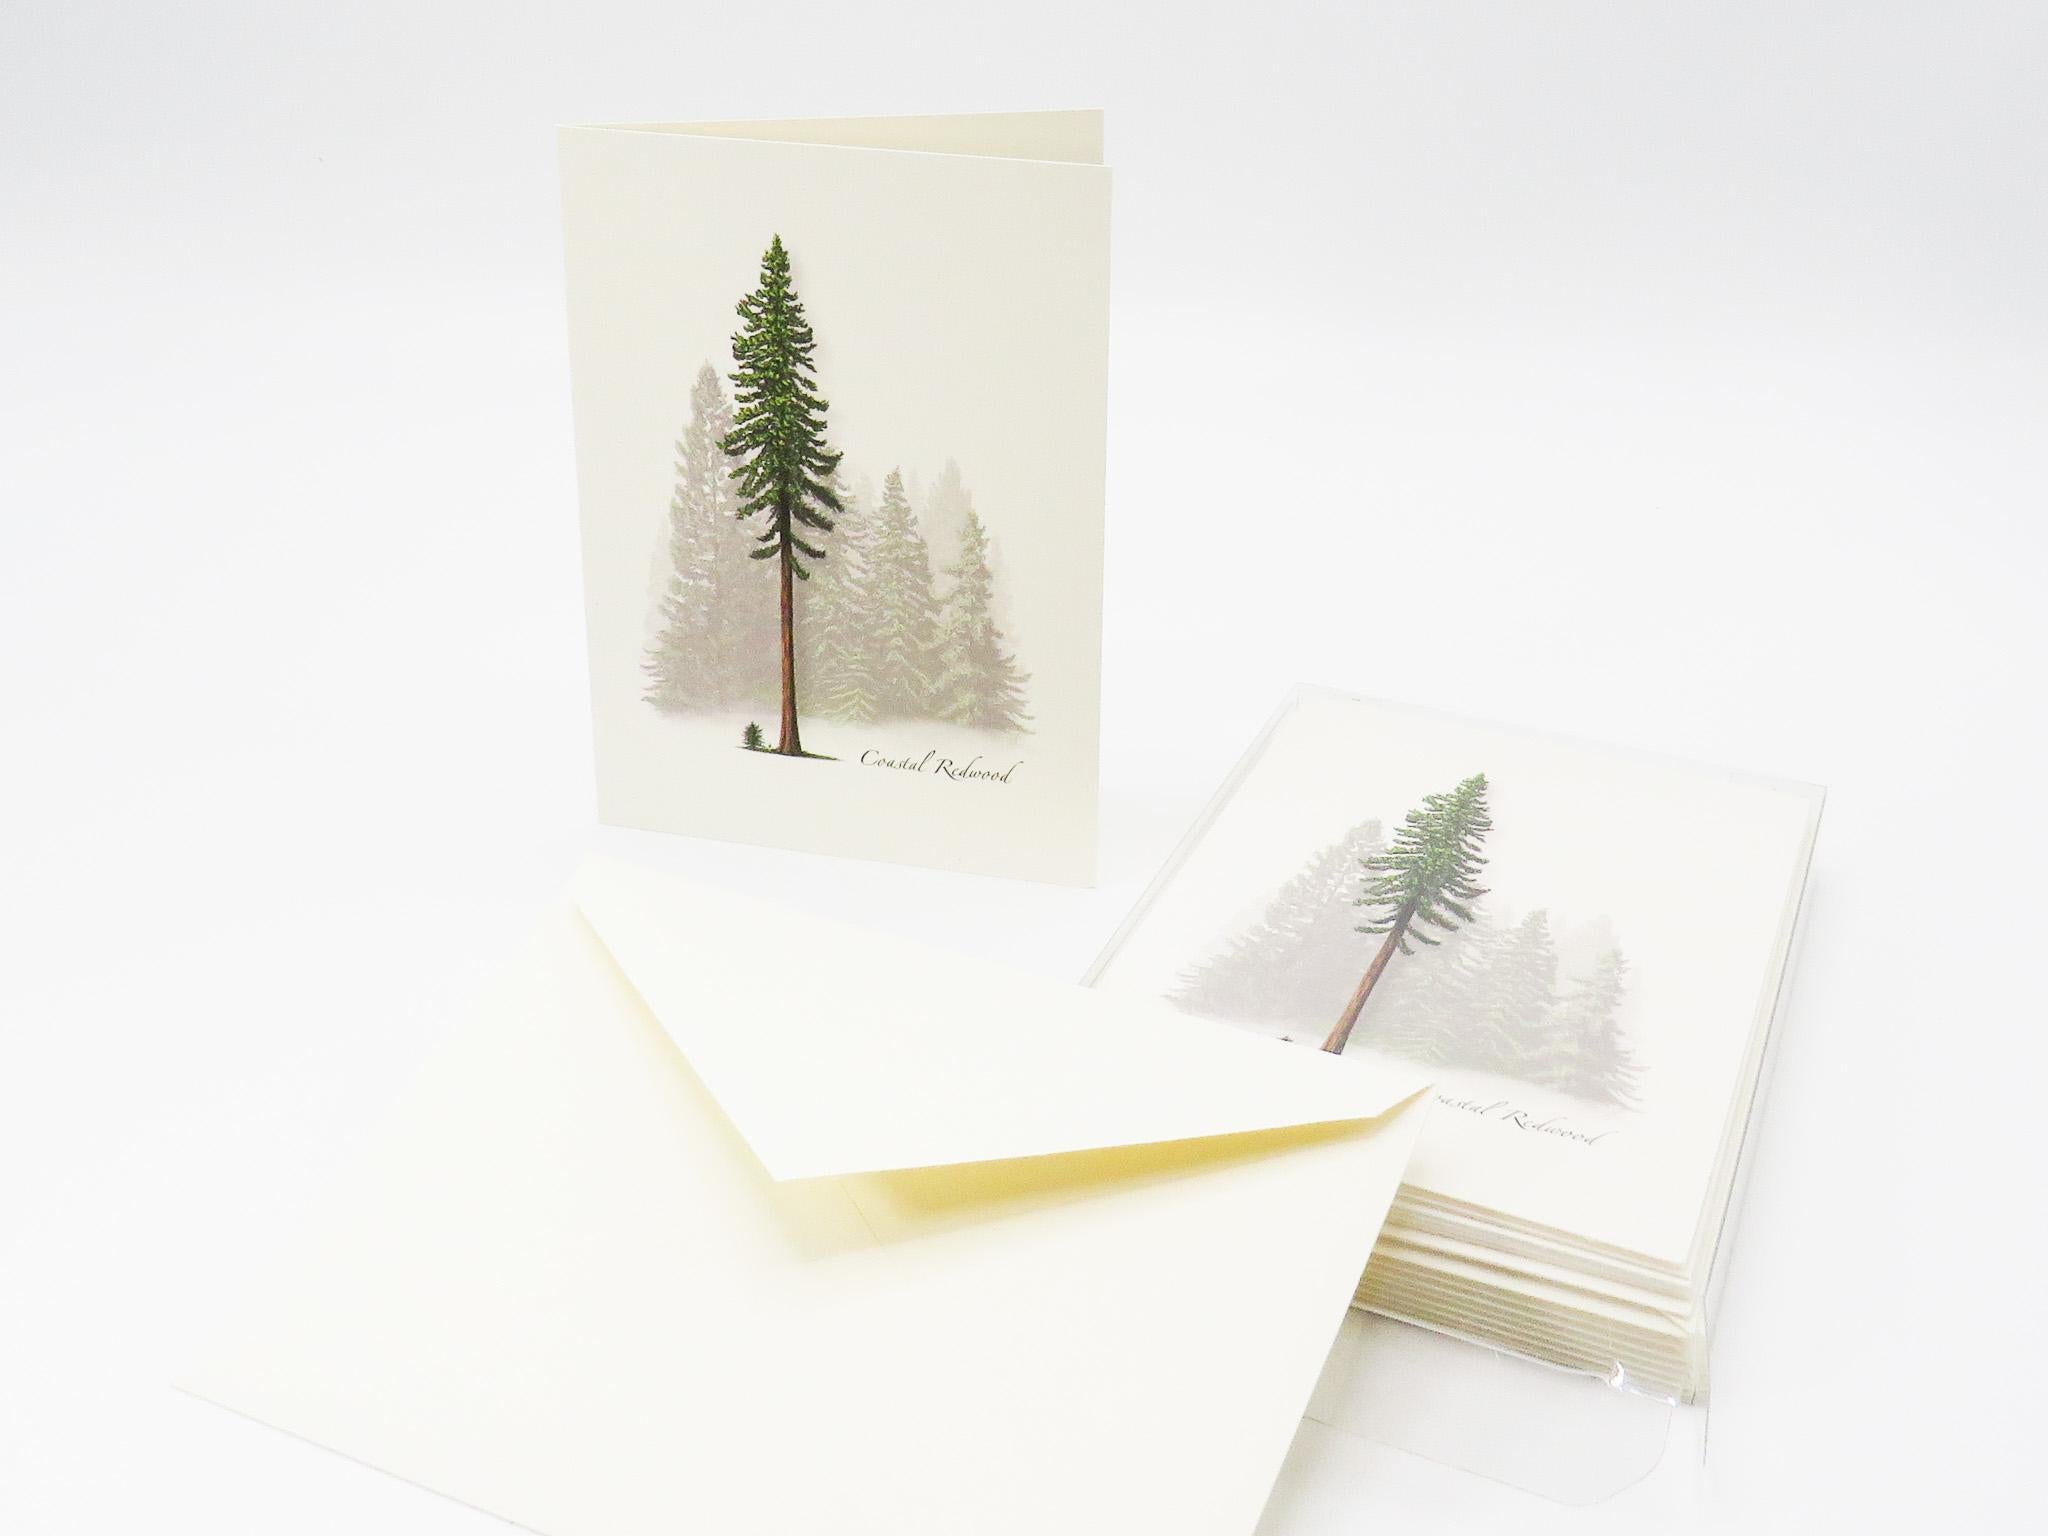 Costal Redwood cards